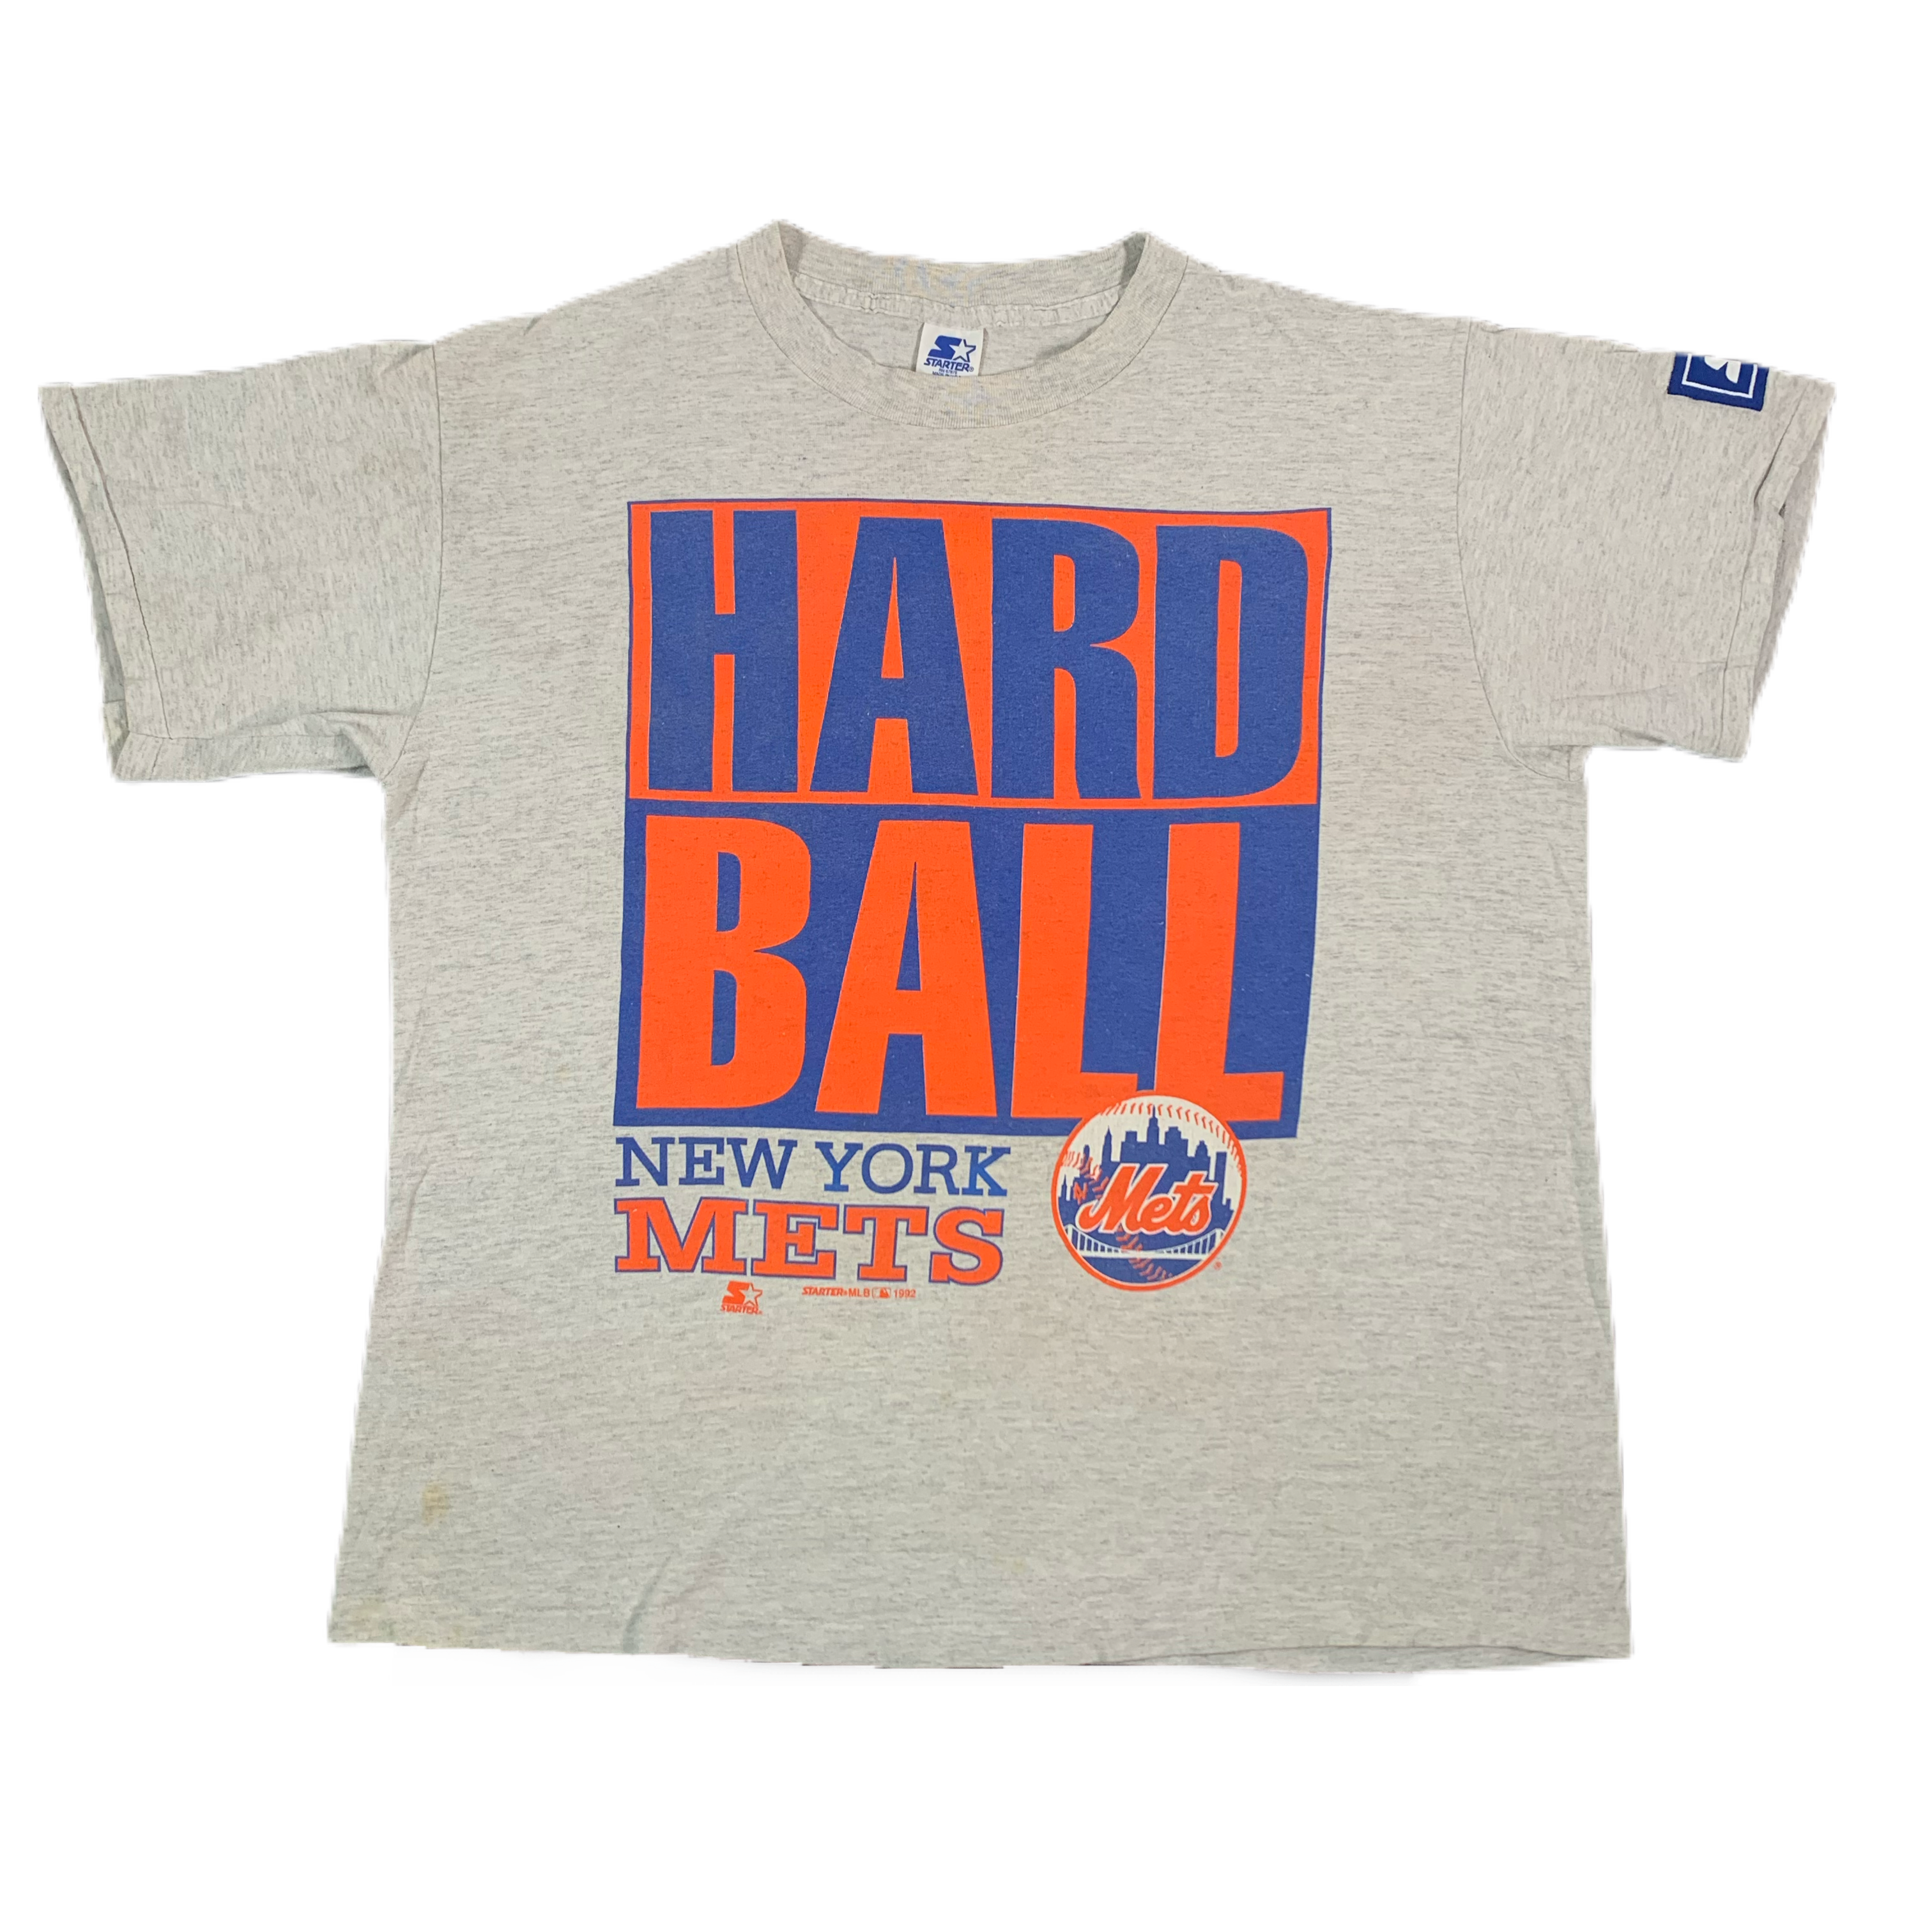 Vintage New York Mets Hard Ball 